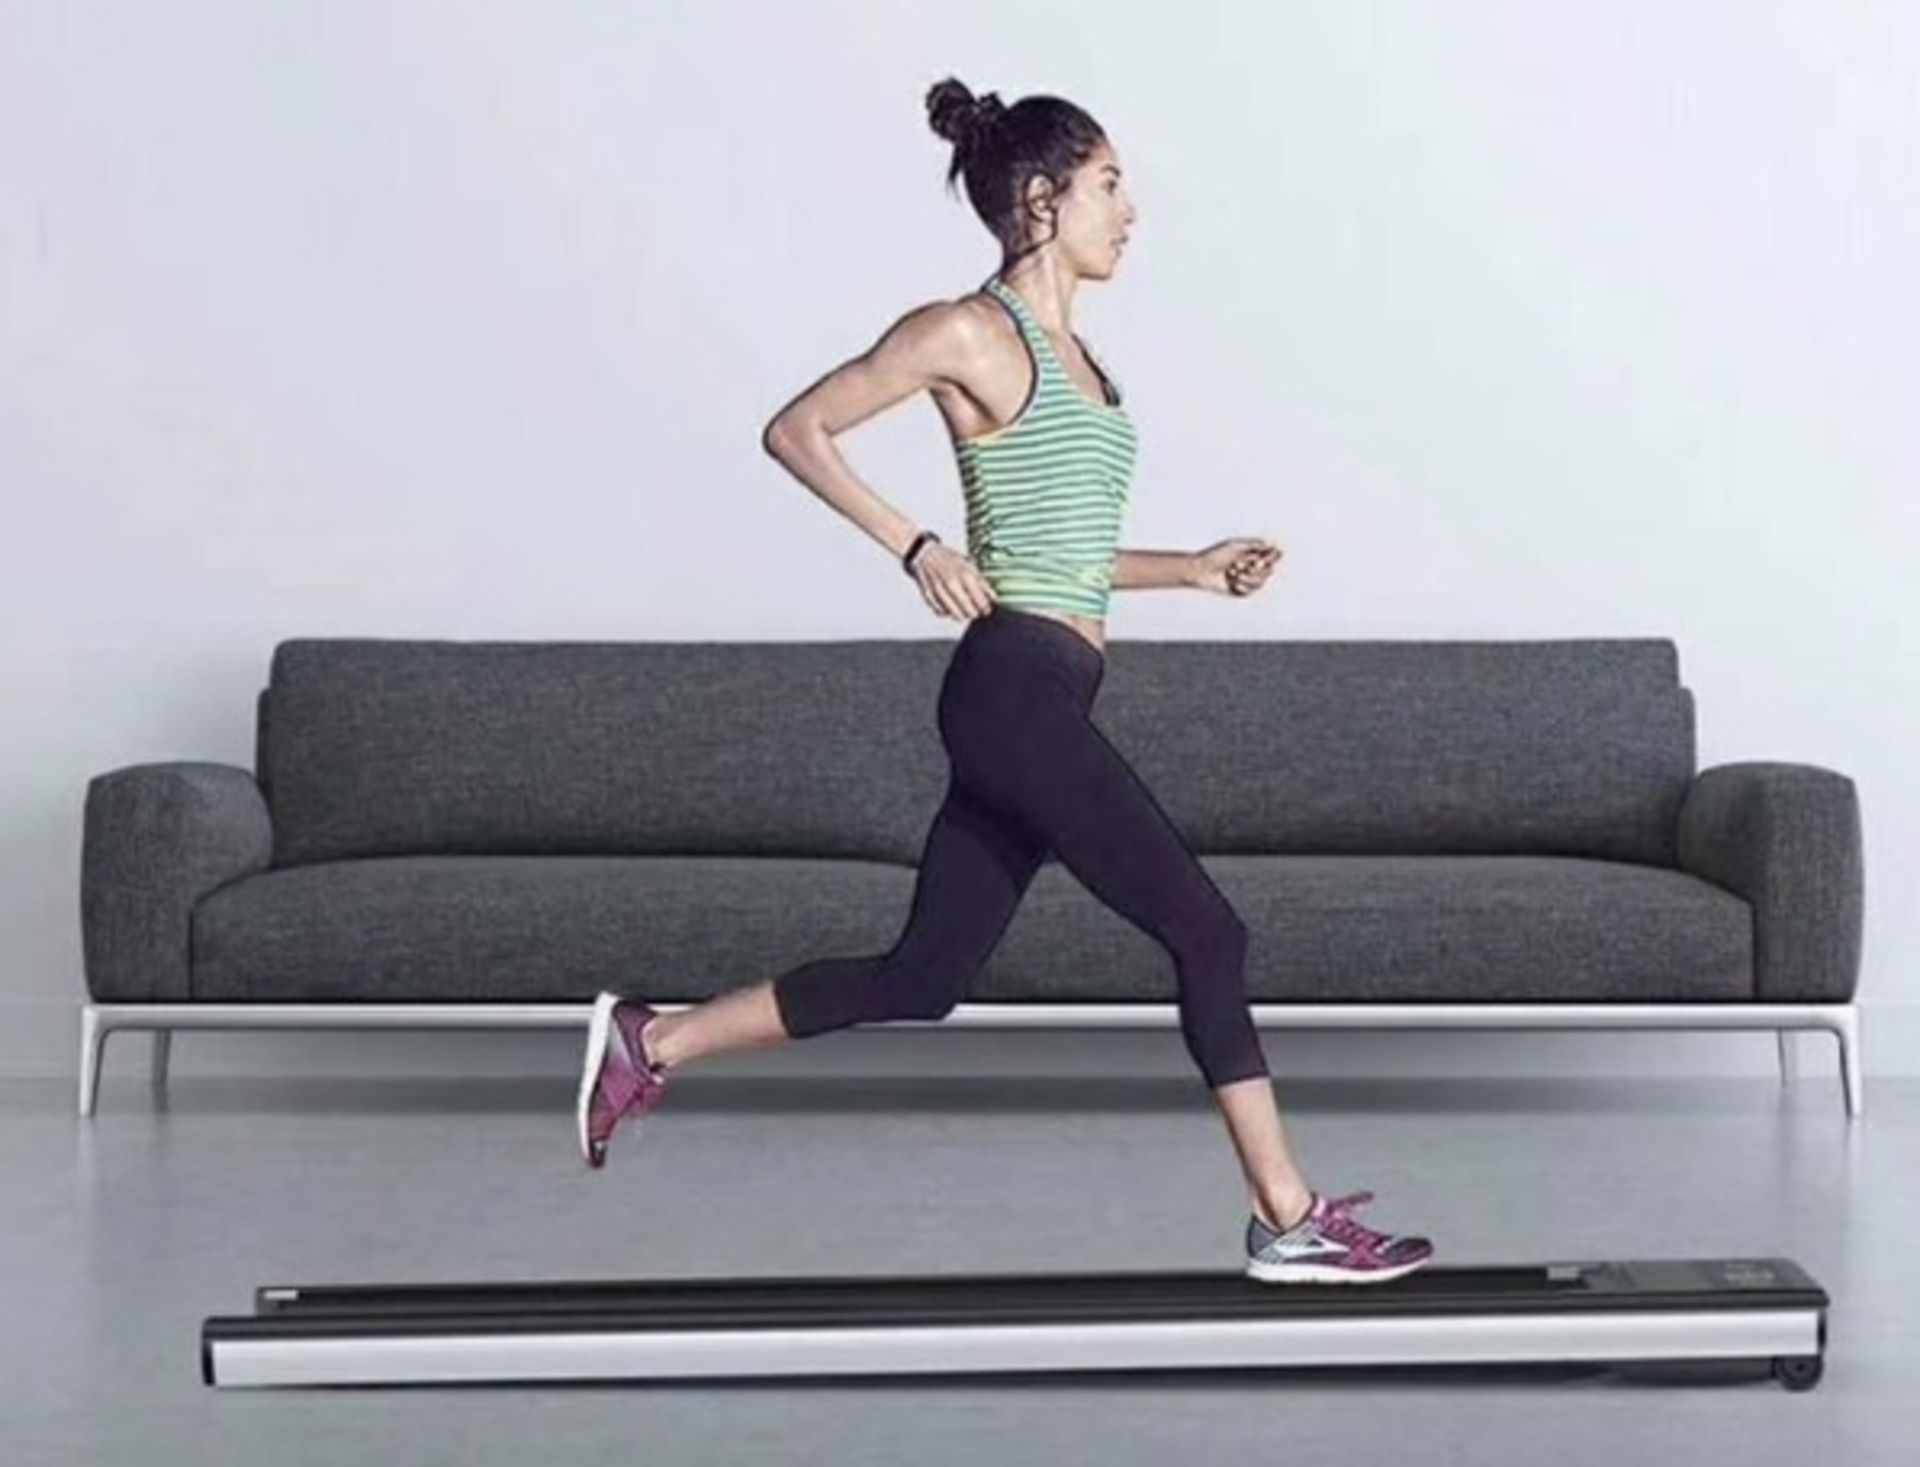 1 x Slim Tread Ultra Thin Smart Treadmill Running / Walking Machine - Lightweight With Folding - Image 4 of 8